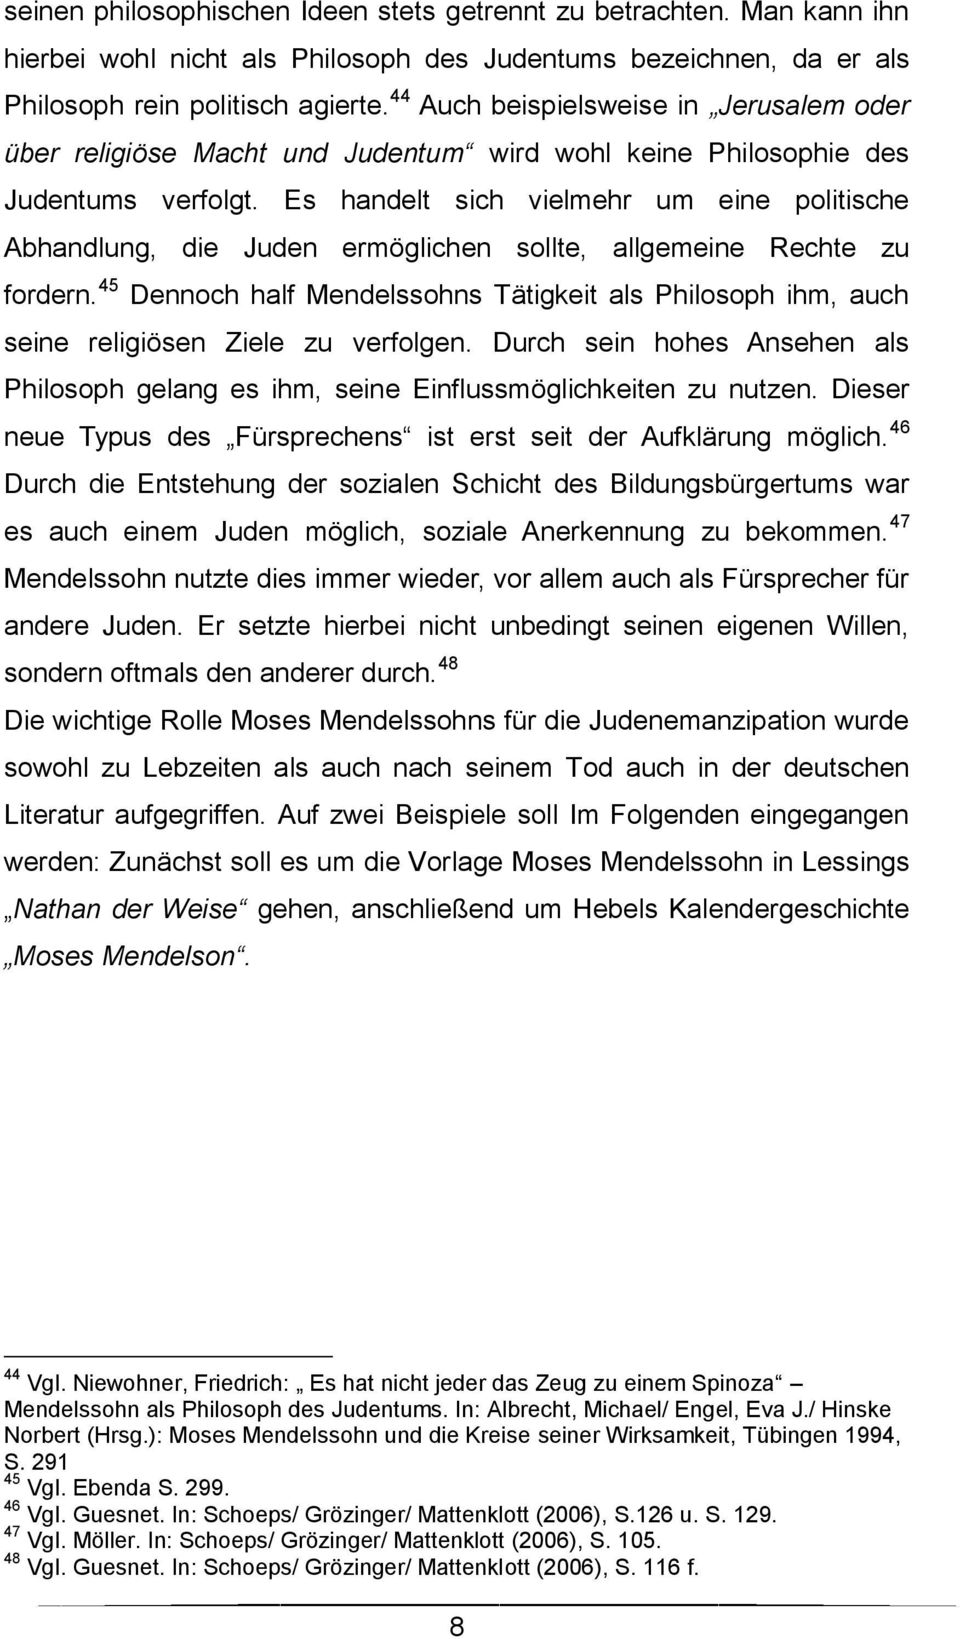 Philosoph des Judentums. In: Albrecht, Michael/ Engel, Eva J./ Hinske Norbert (Hrsg.): Moses Mendelssohn und die Kreise seiner Wirksamkeit, Tübingen 1994, S. 291 45 Vgl. Ebenda S. 299. 46 Vgl.